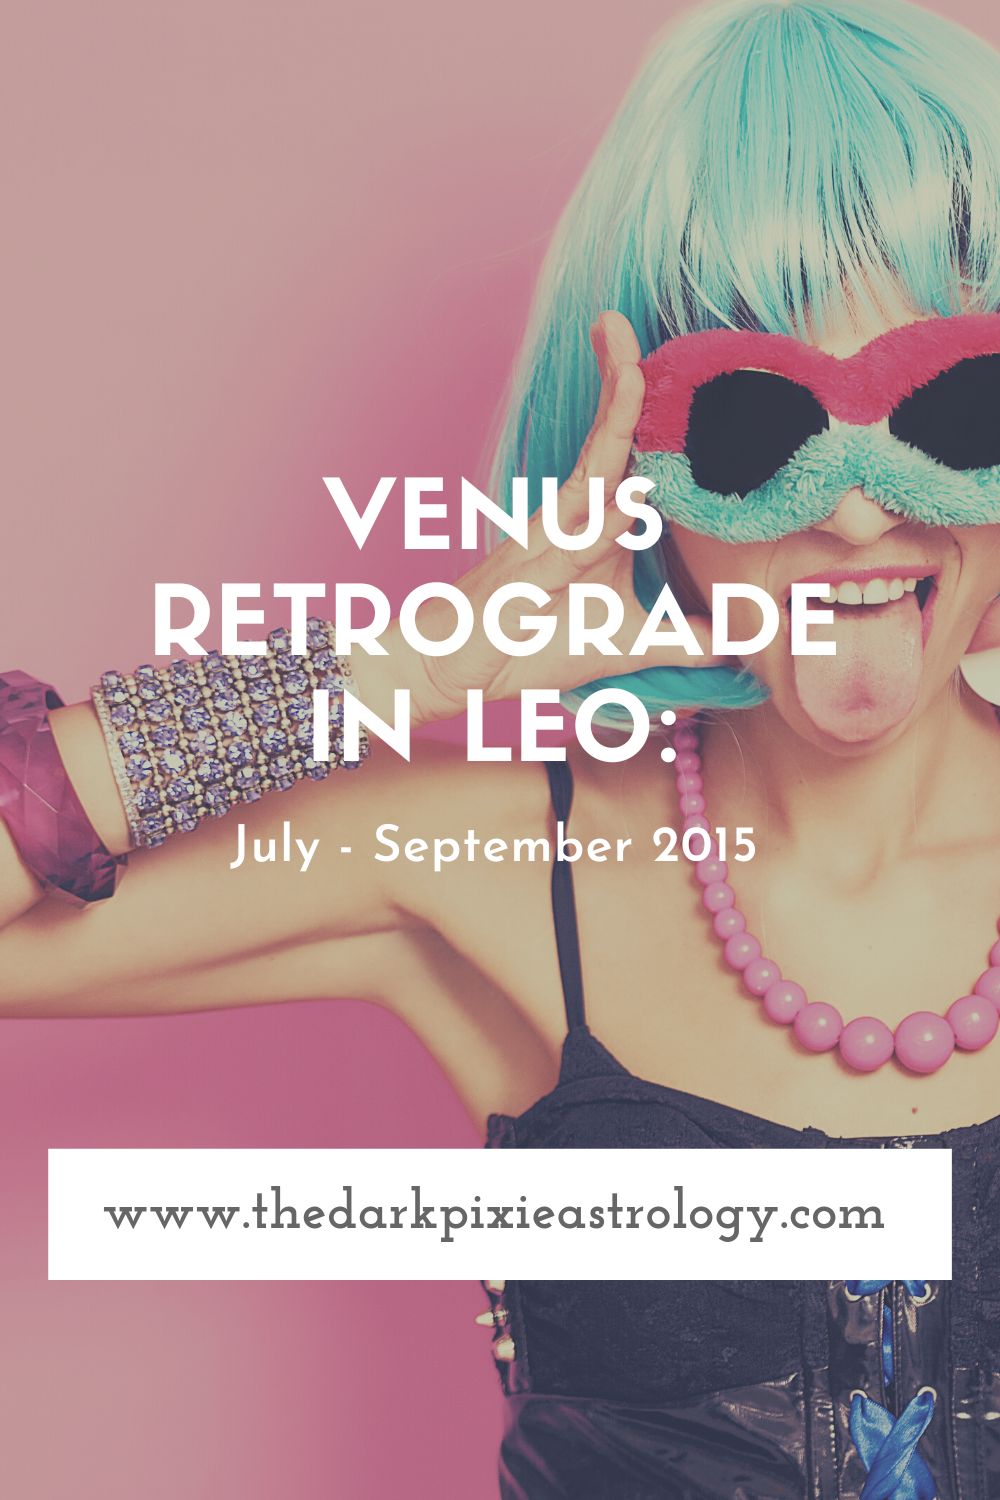 Venus Retrograde in Leo: July - September 2015 - The Dark Pixie Astrology